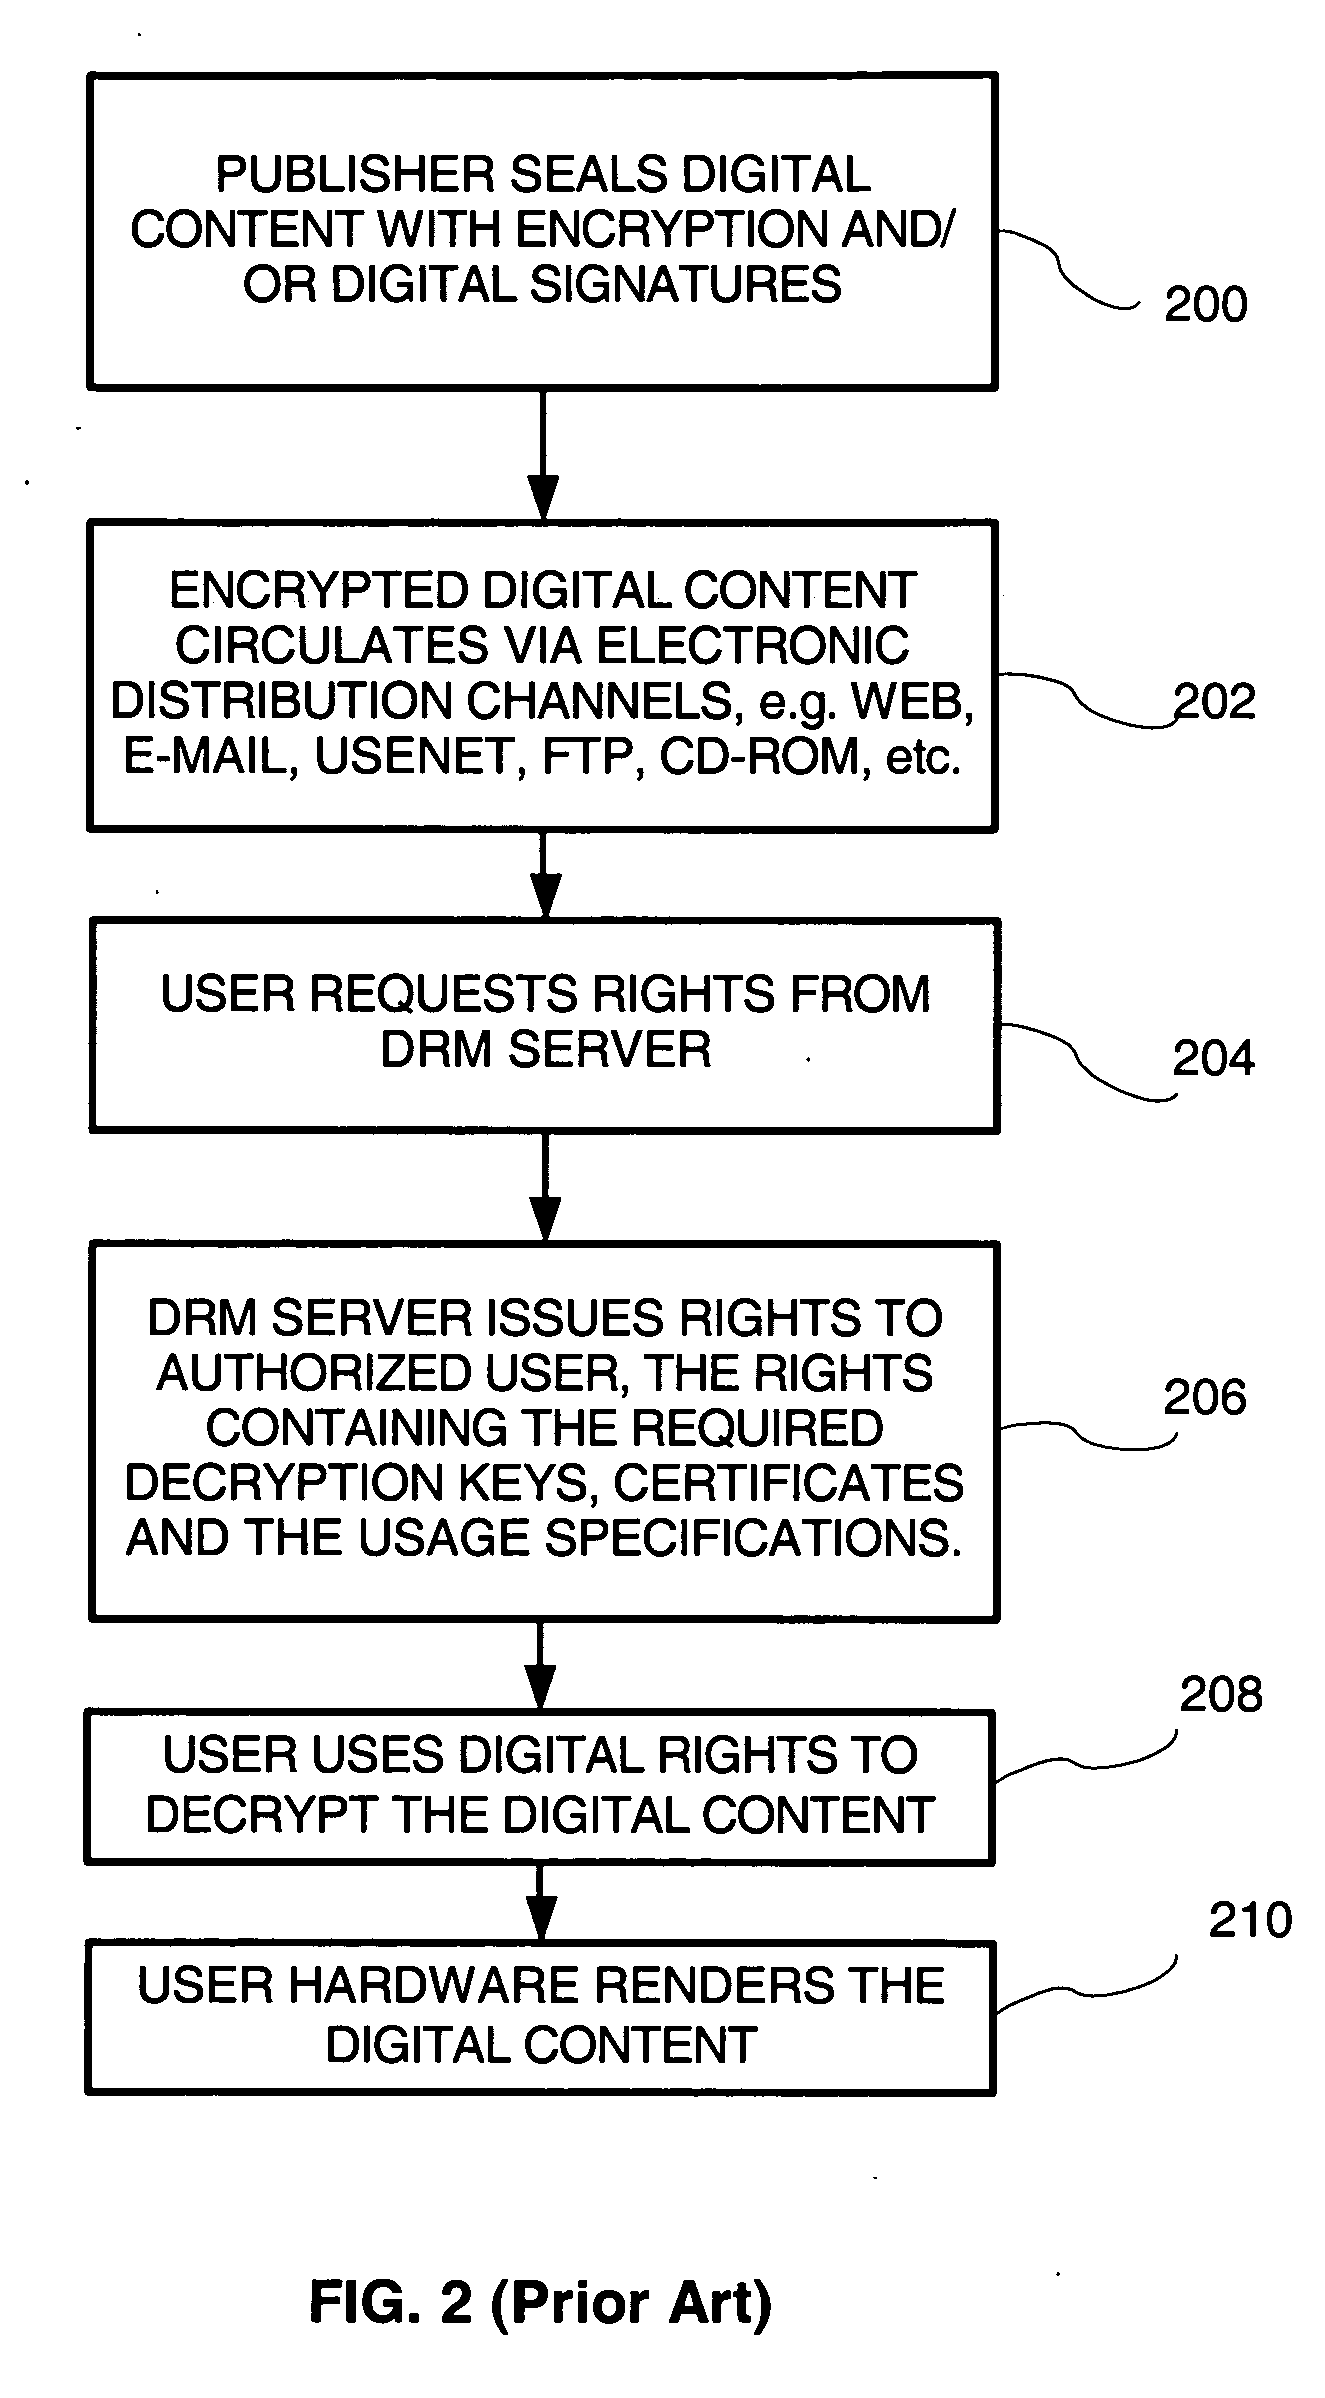 Digital rights management system based on hardware identification